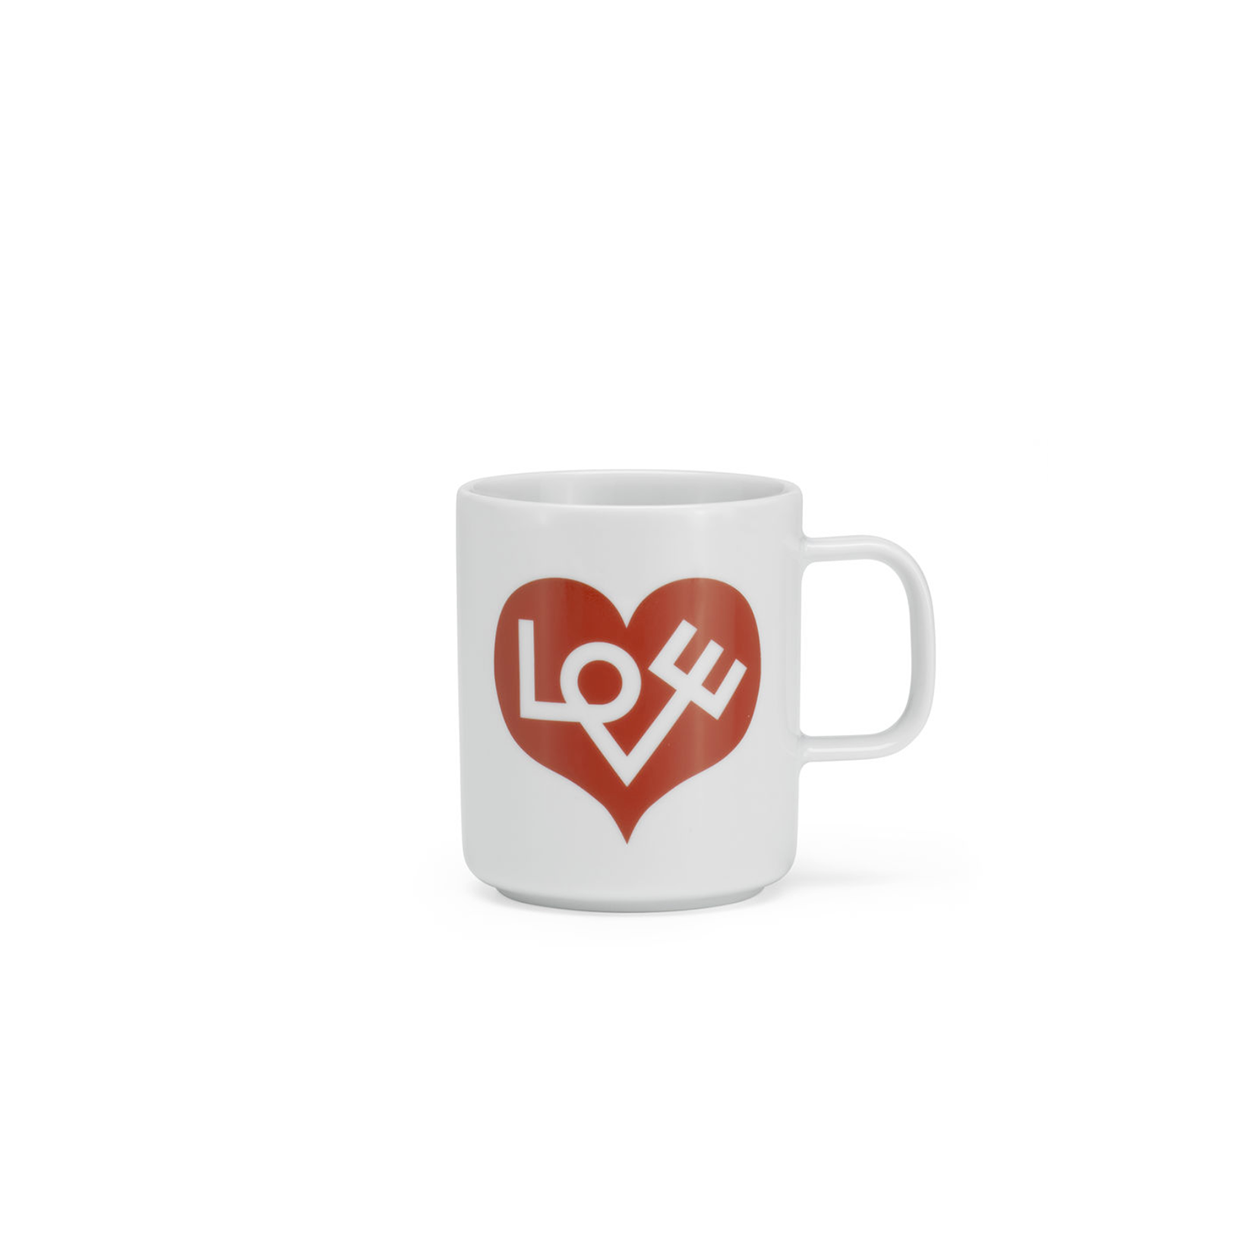 vitra coffee mugs love heart red